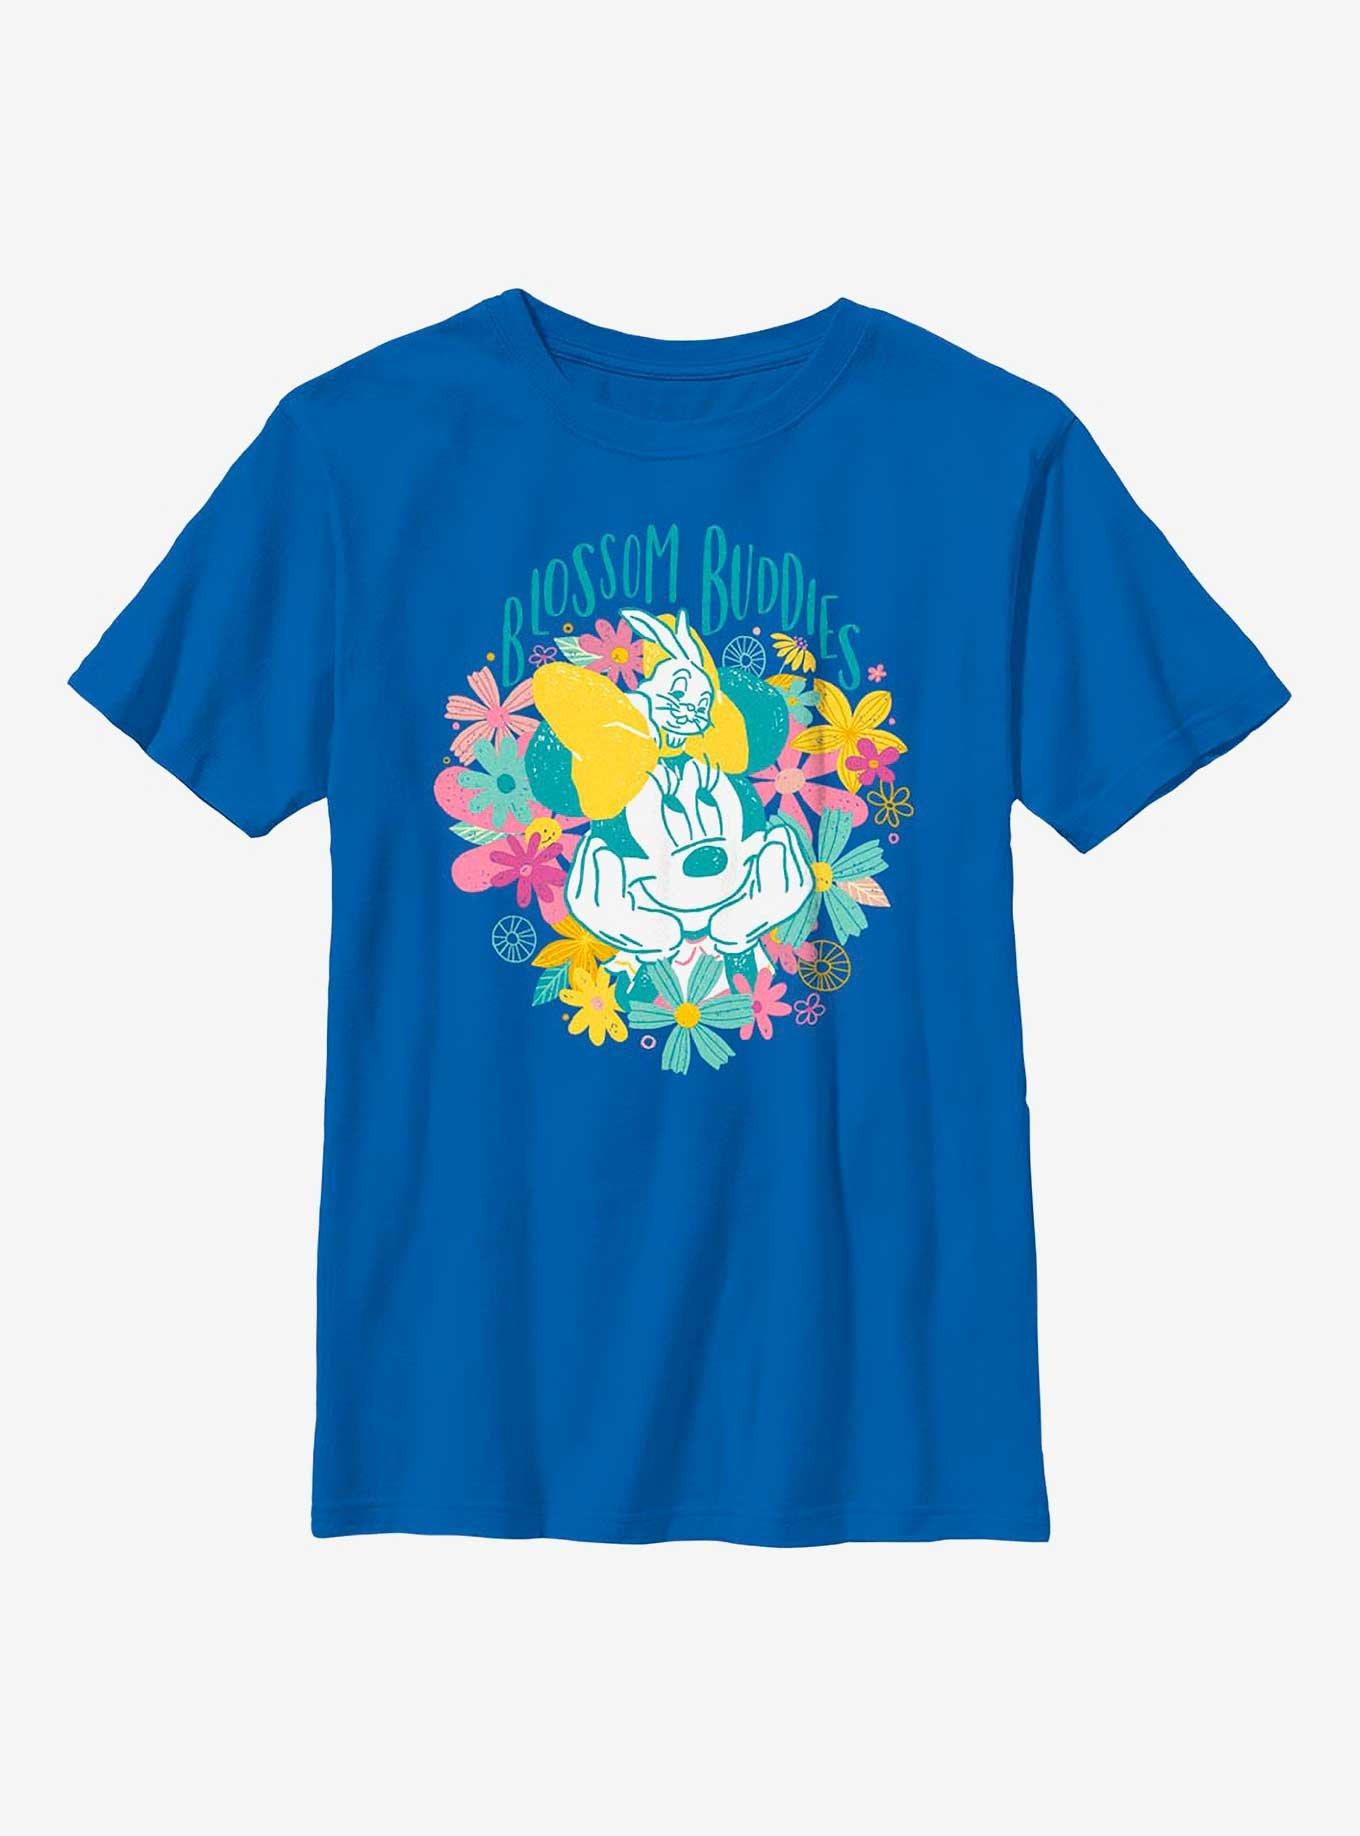 Disney Minnie Mouse Blossom Buddies Youth T-Shirt, ROYAL, hi-res